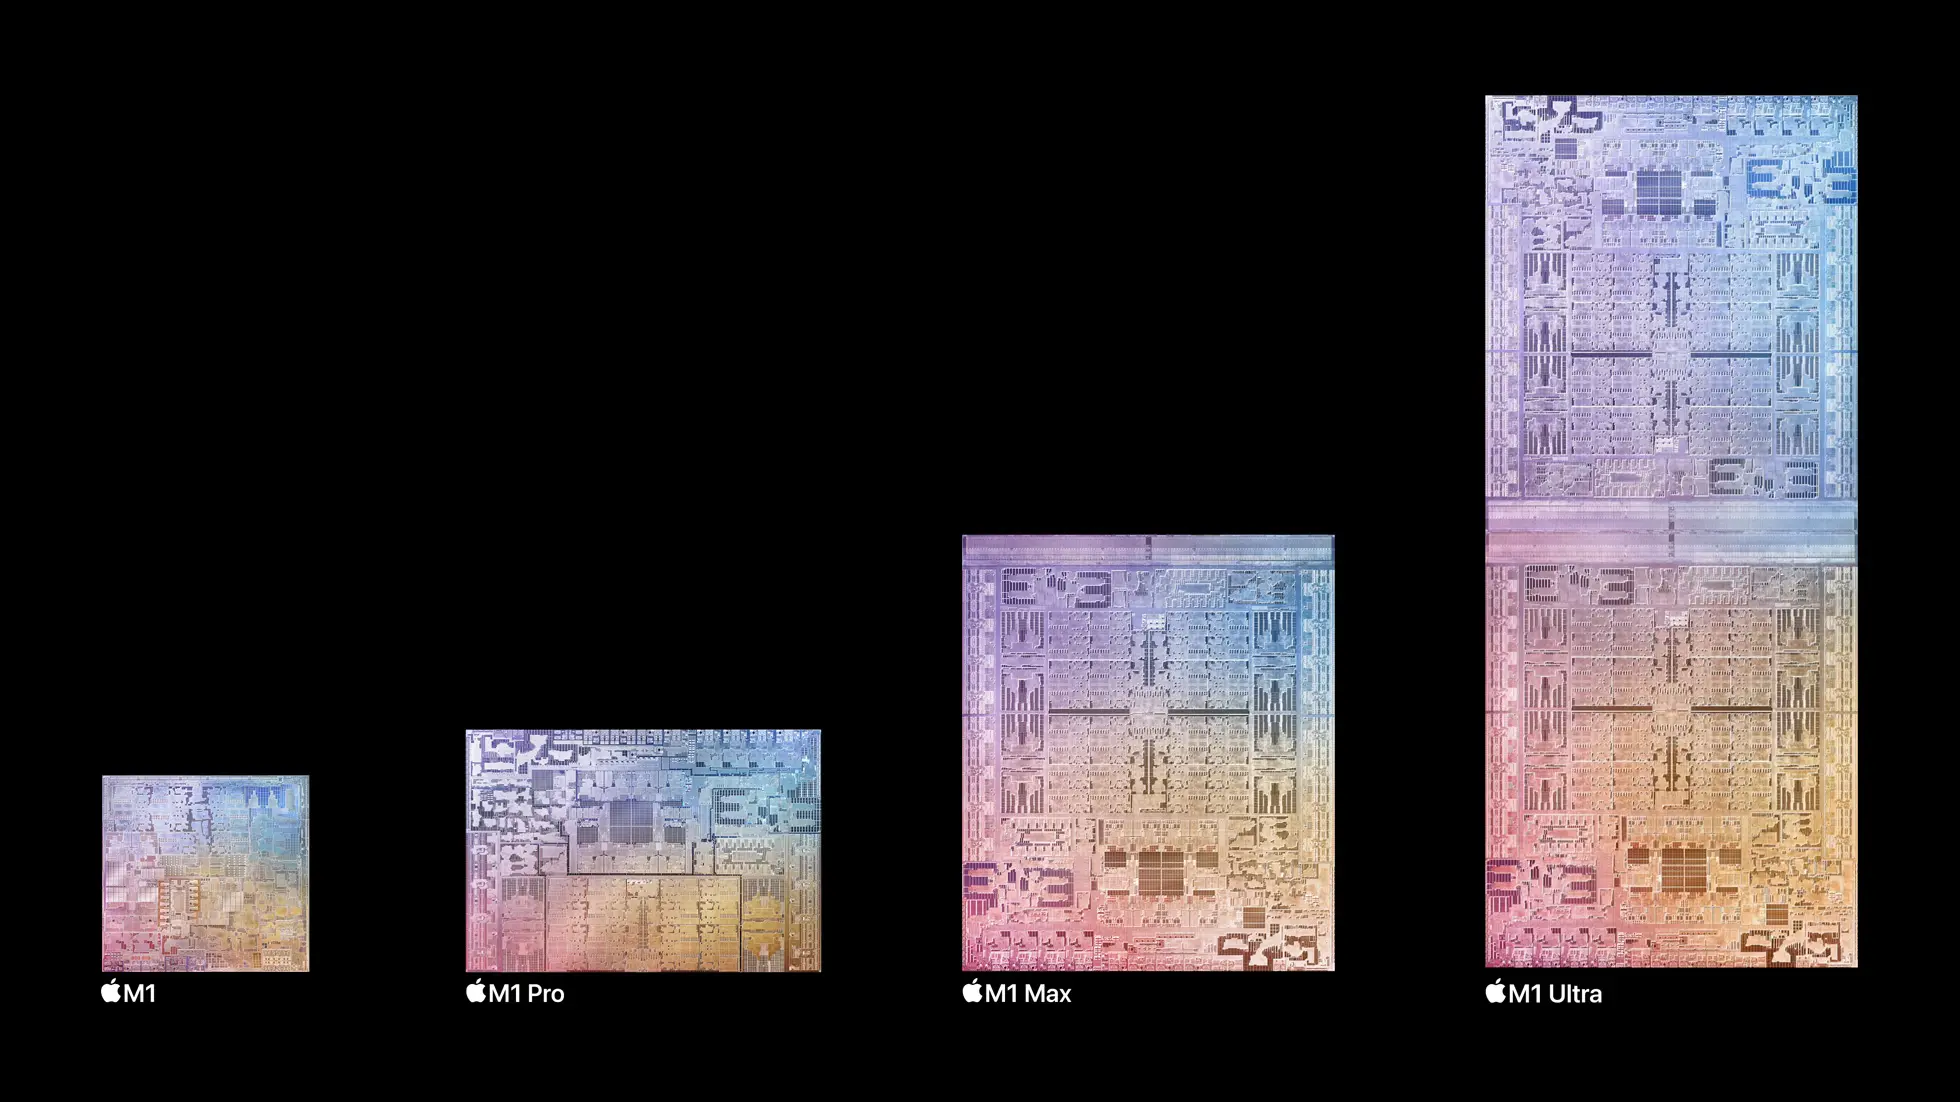 Apple's marketing image showcasing each chip in the M1 family, left to right: M1, M1 Pro, M1 Max and M1 Ultra